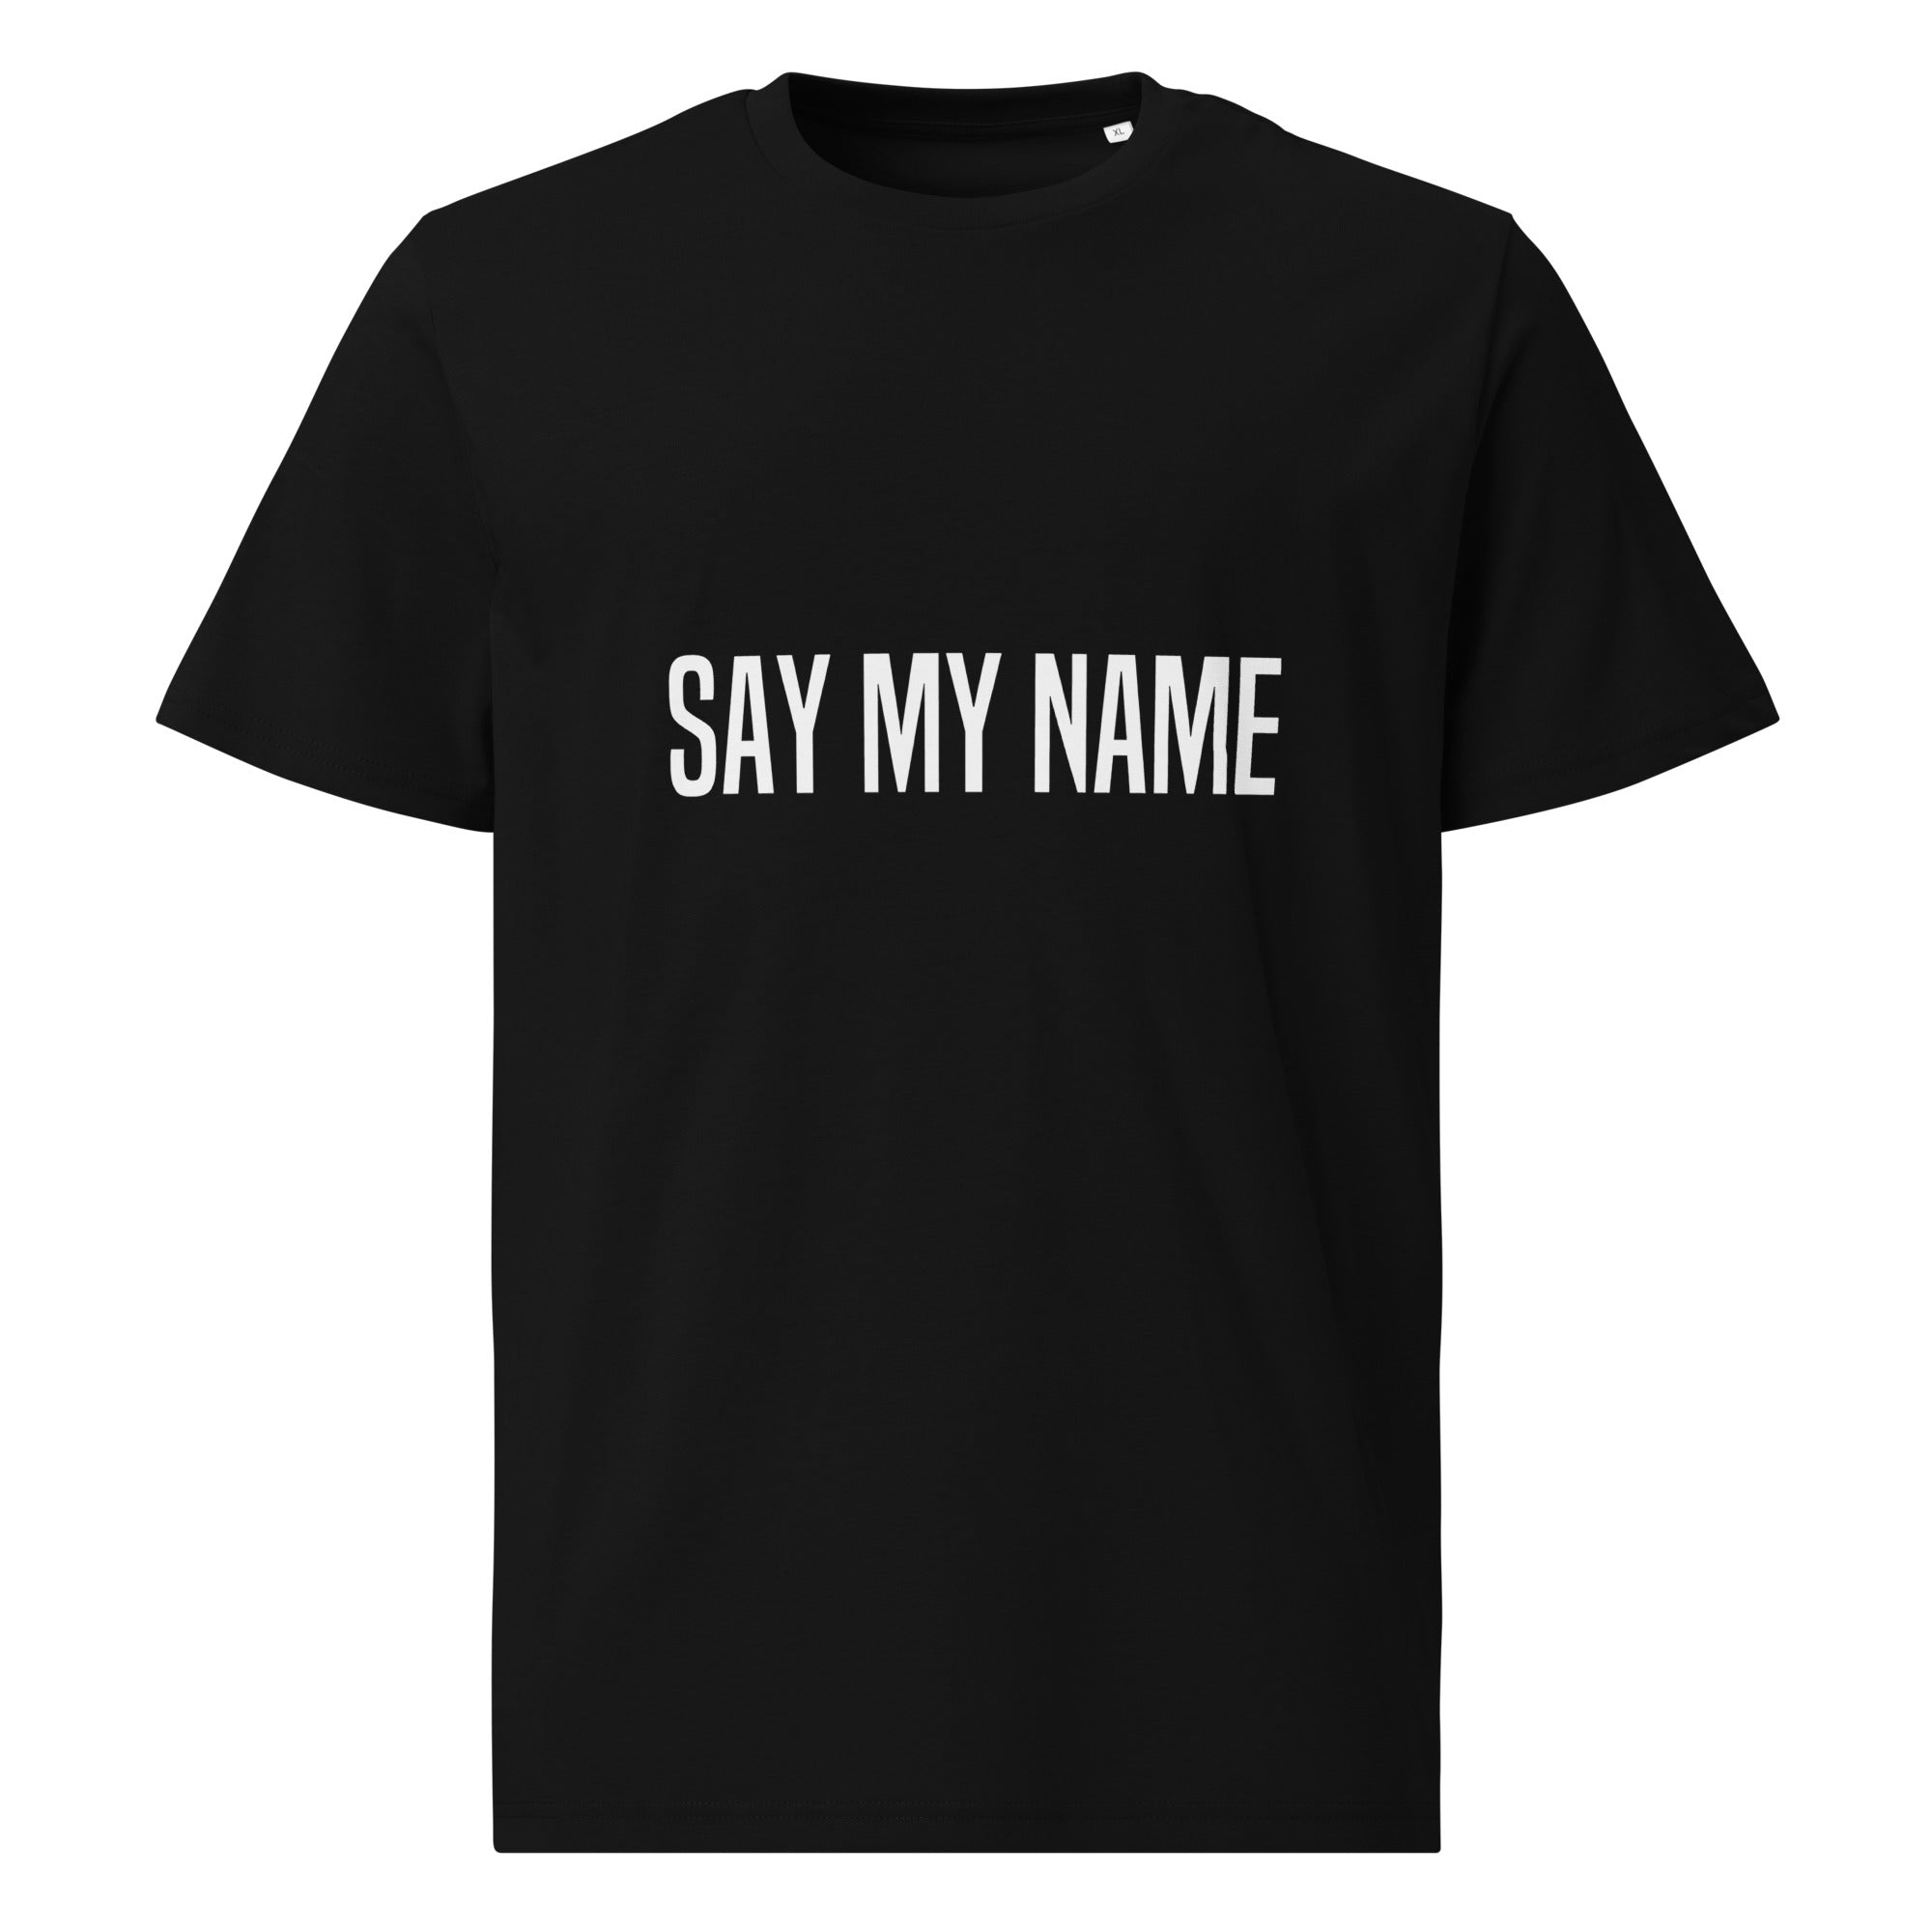 CSG unisex T-SHIRT “SAY MY NAME” white